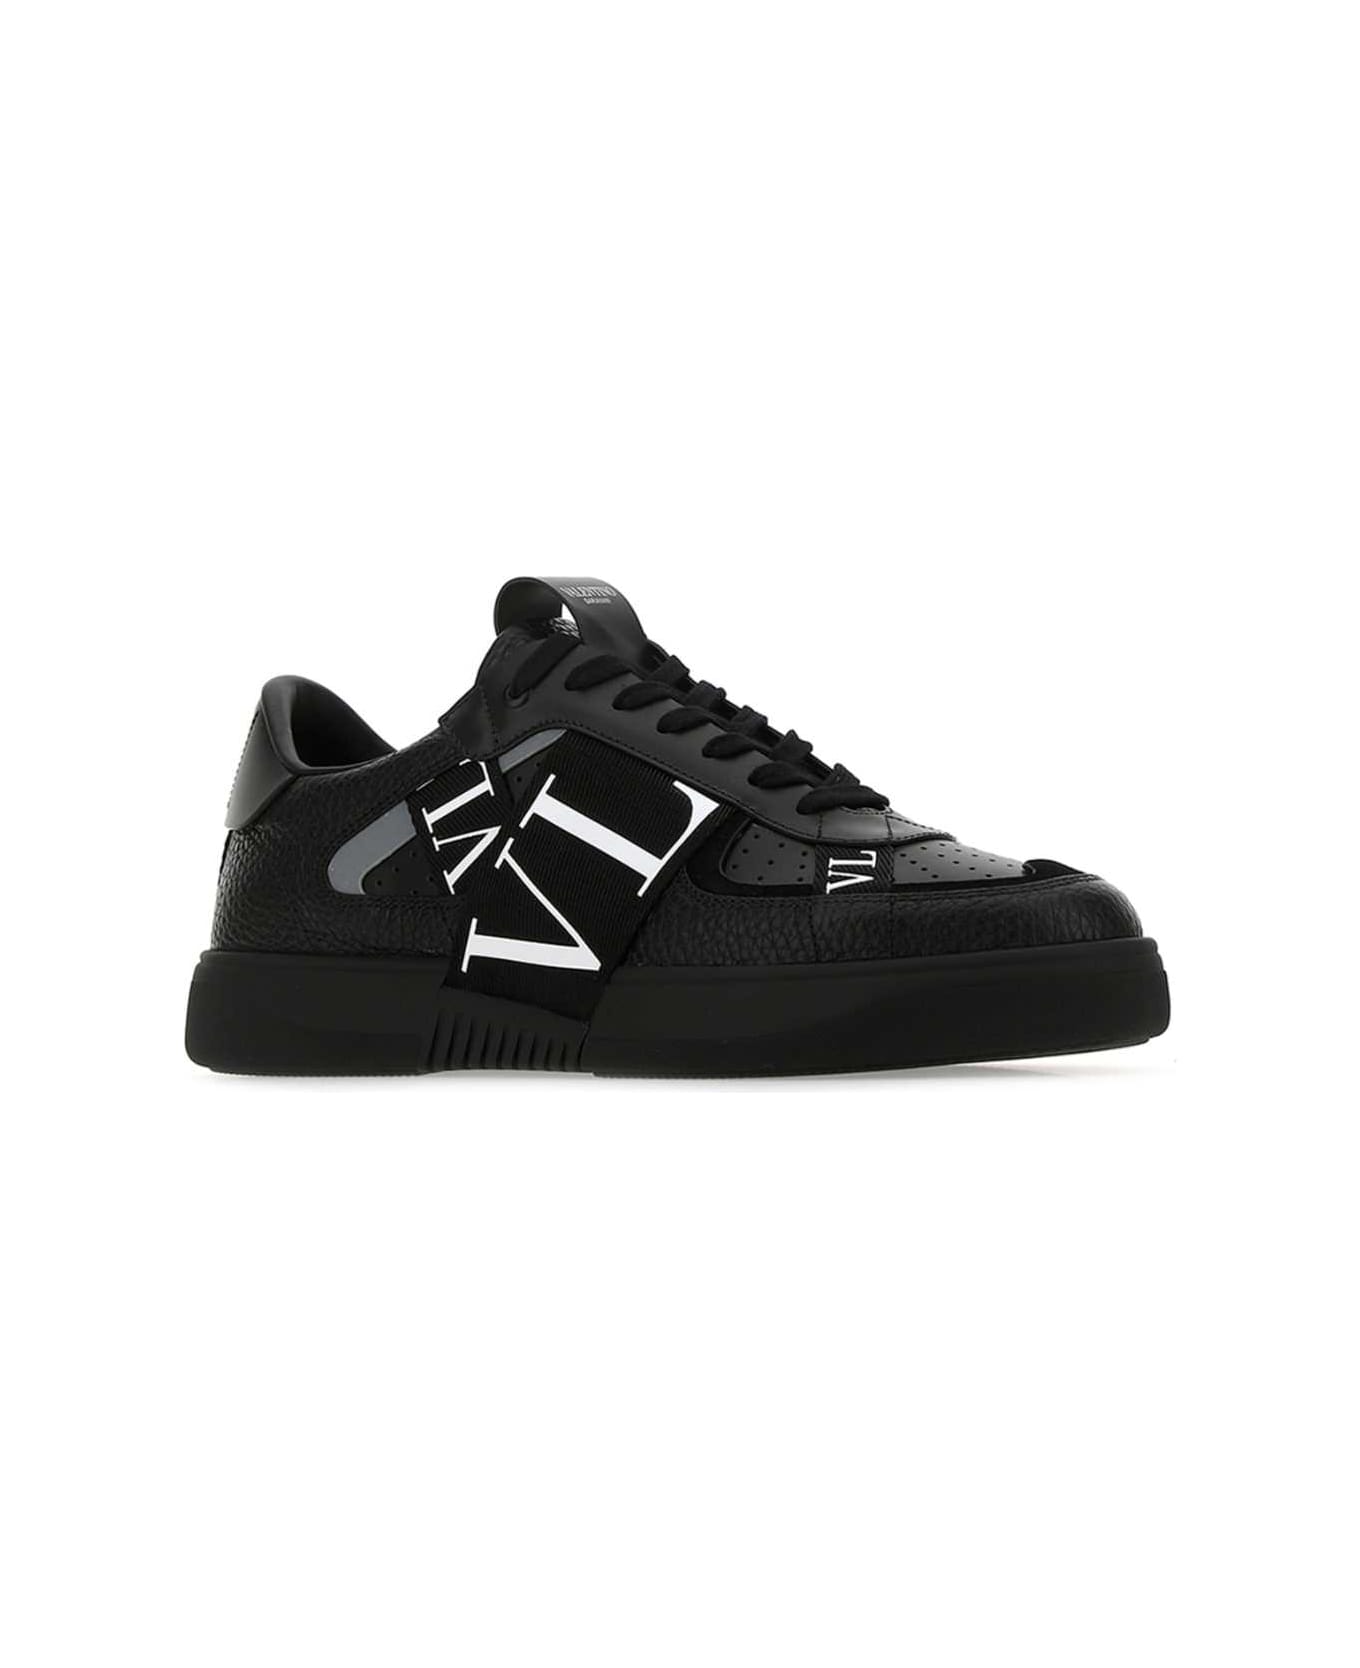 Valentino Garavani Black Leather Vl7n Sneakers - NERONEROBIANERONERONERONERO スニーカー